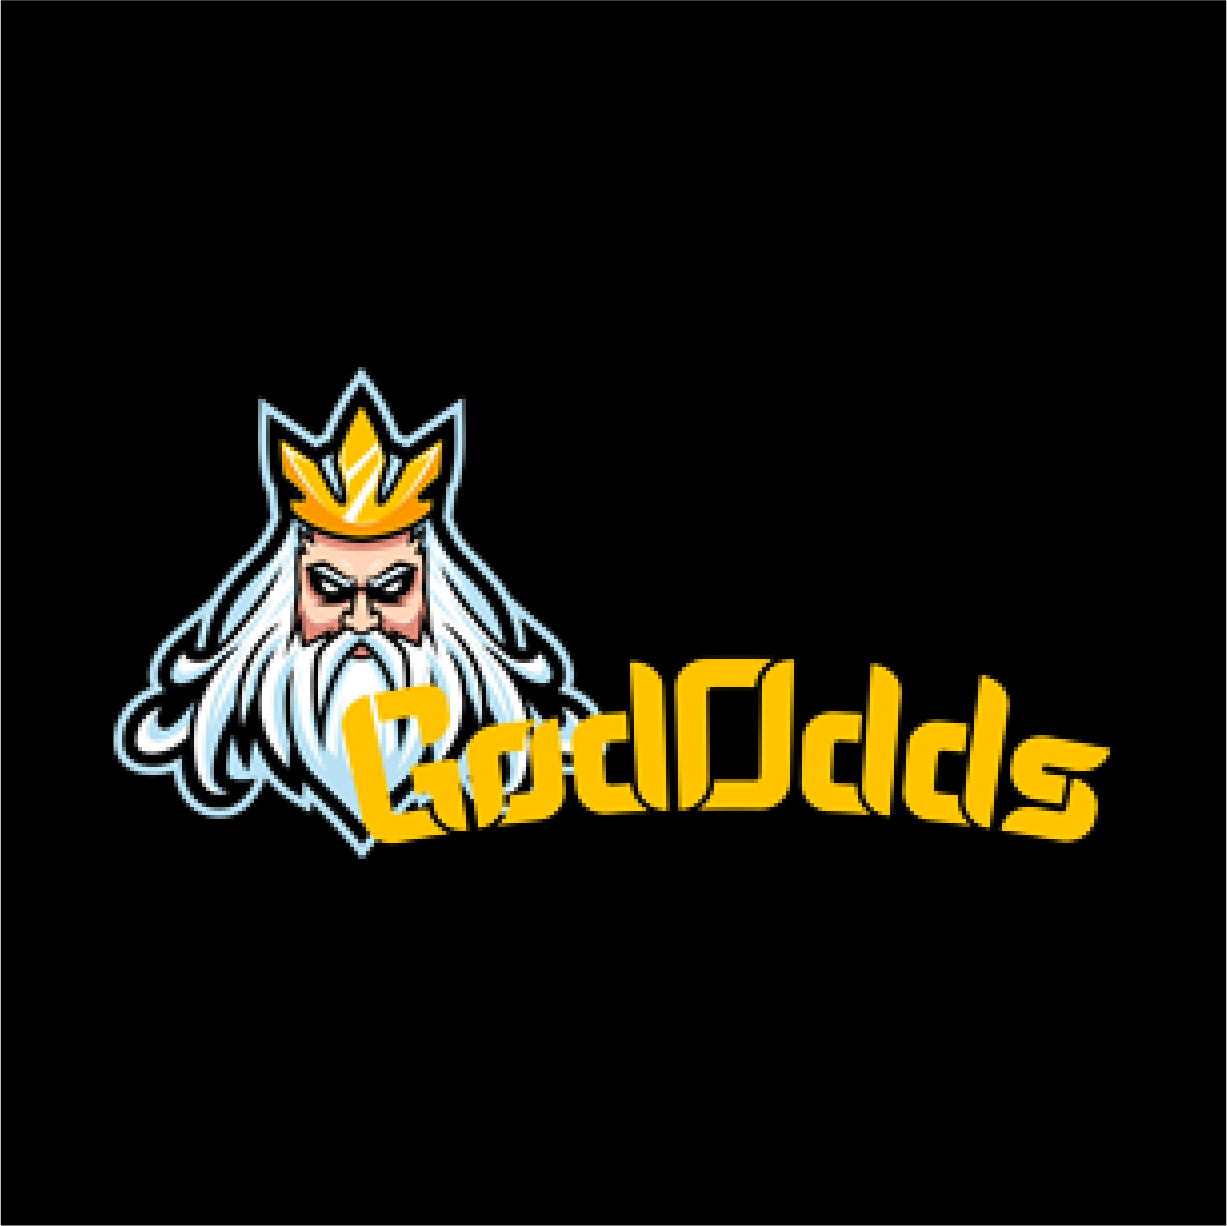 Gododds logo